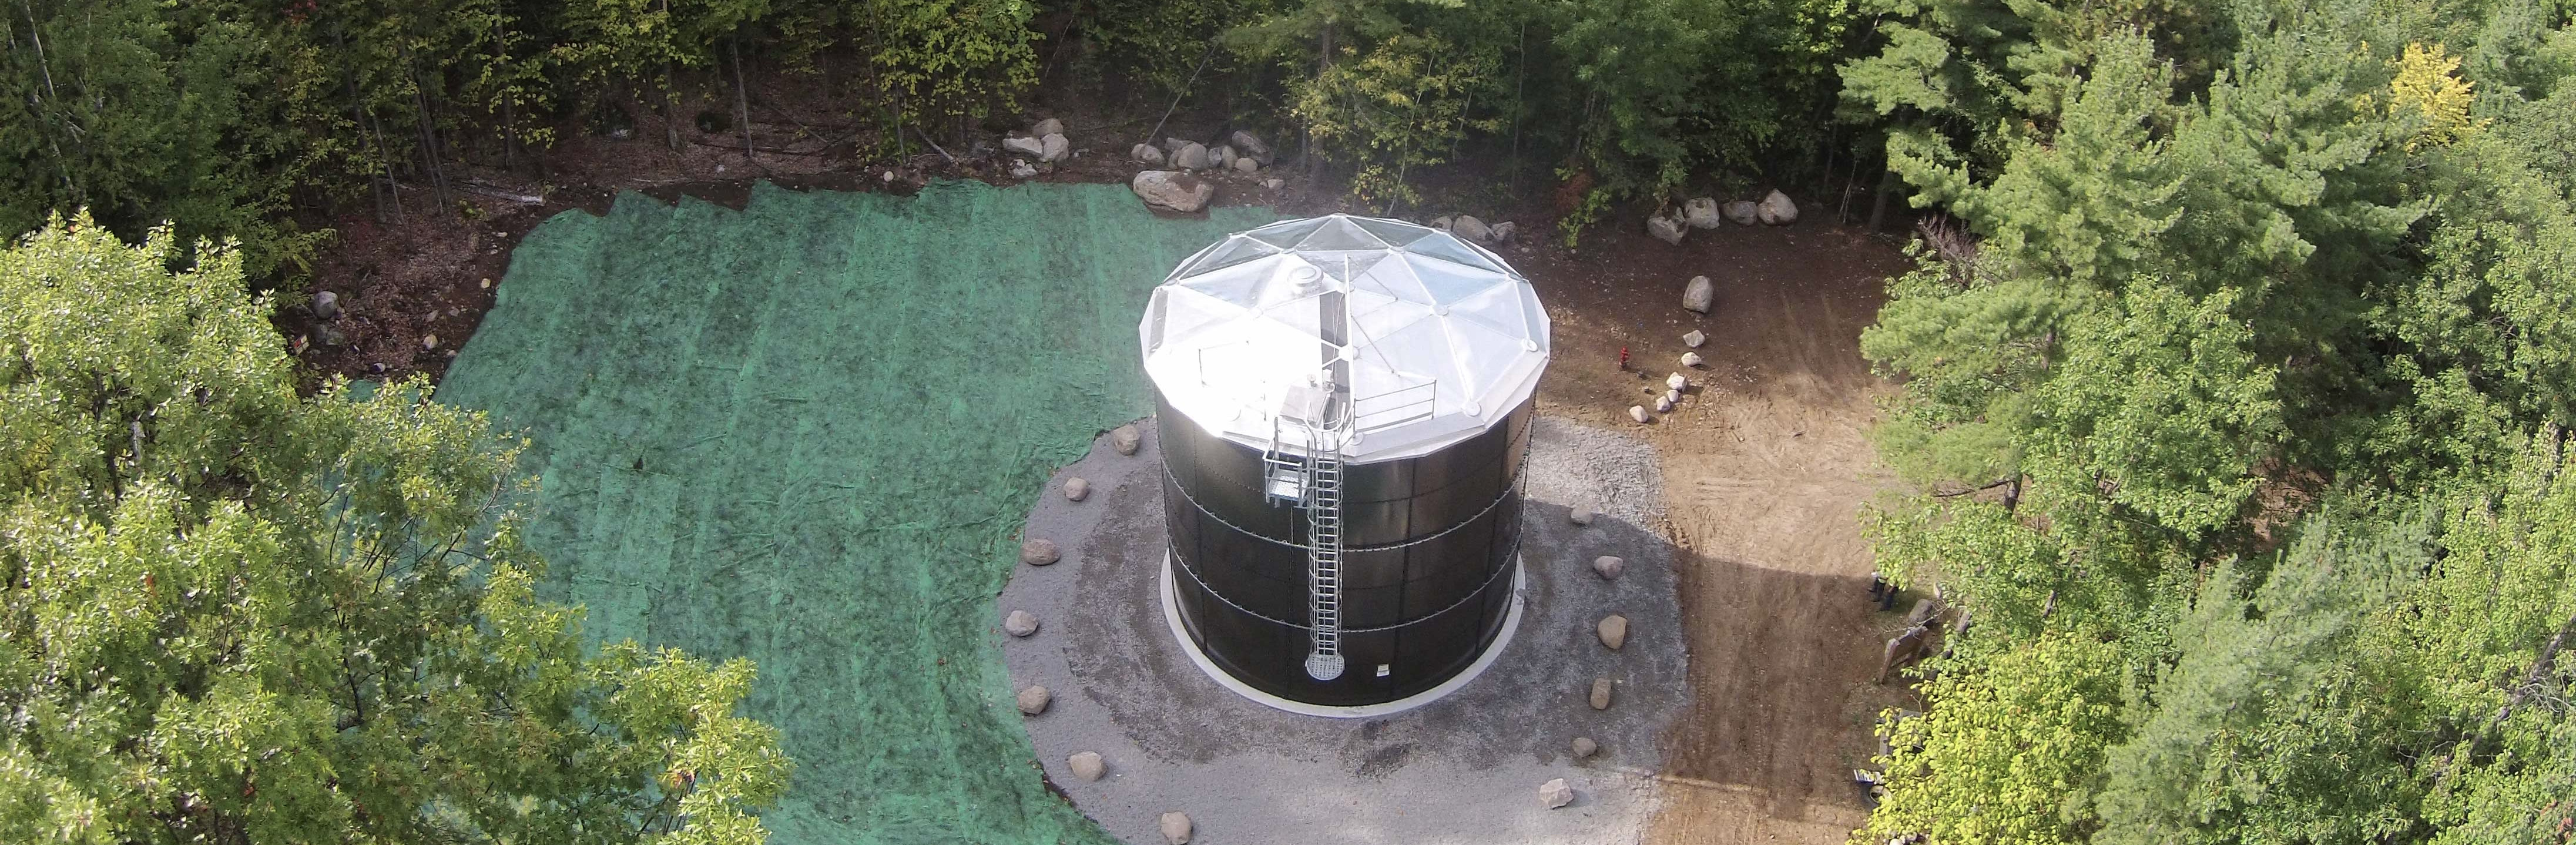 image of FWWC water tank